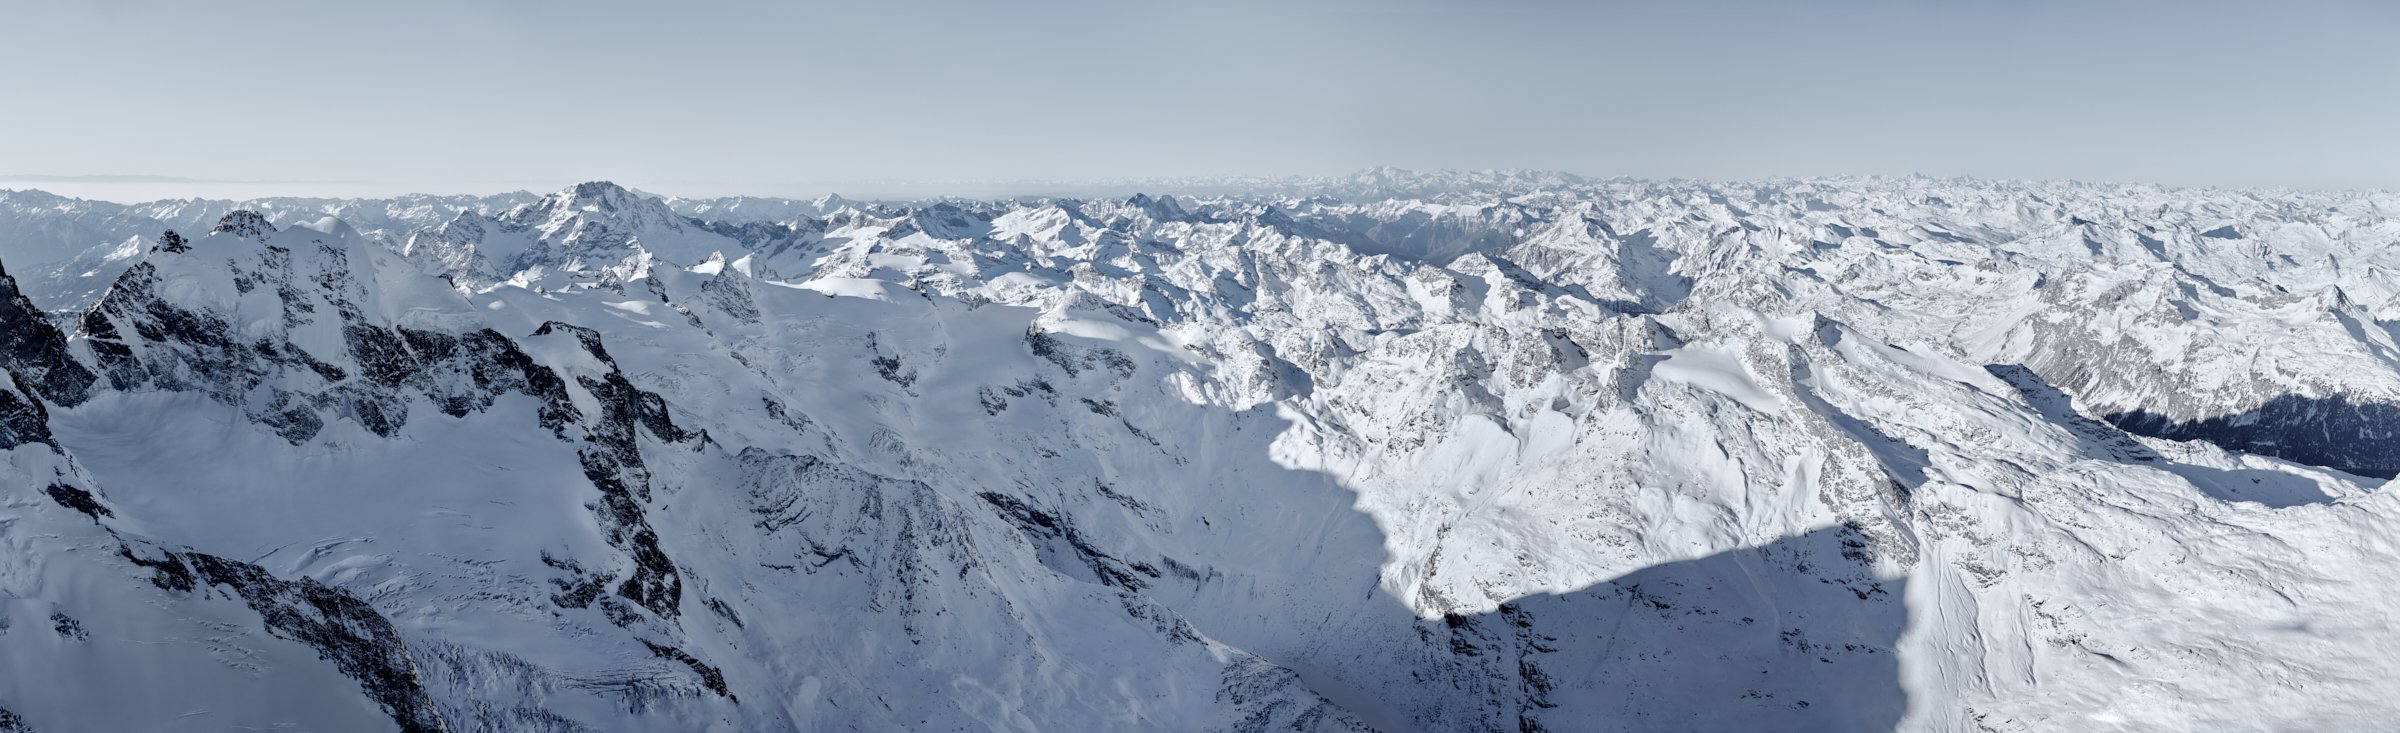 Panoramablick vom Piz Bernina